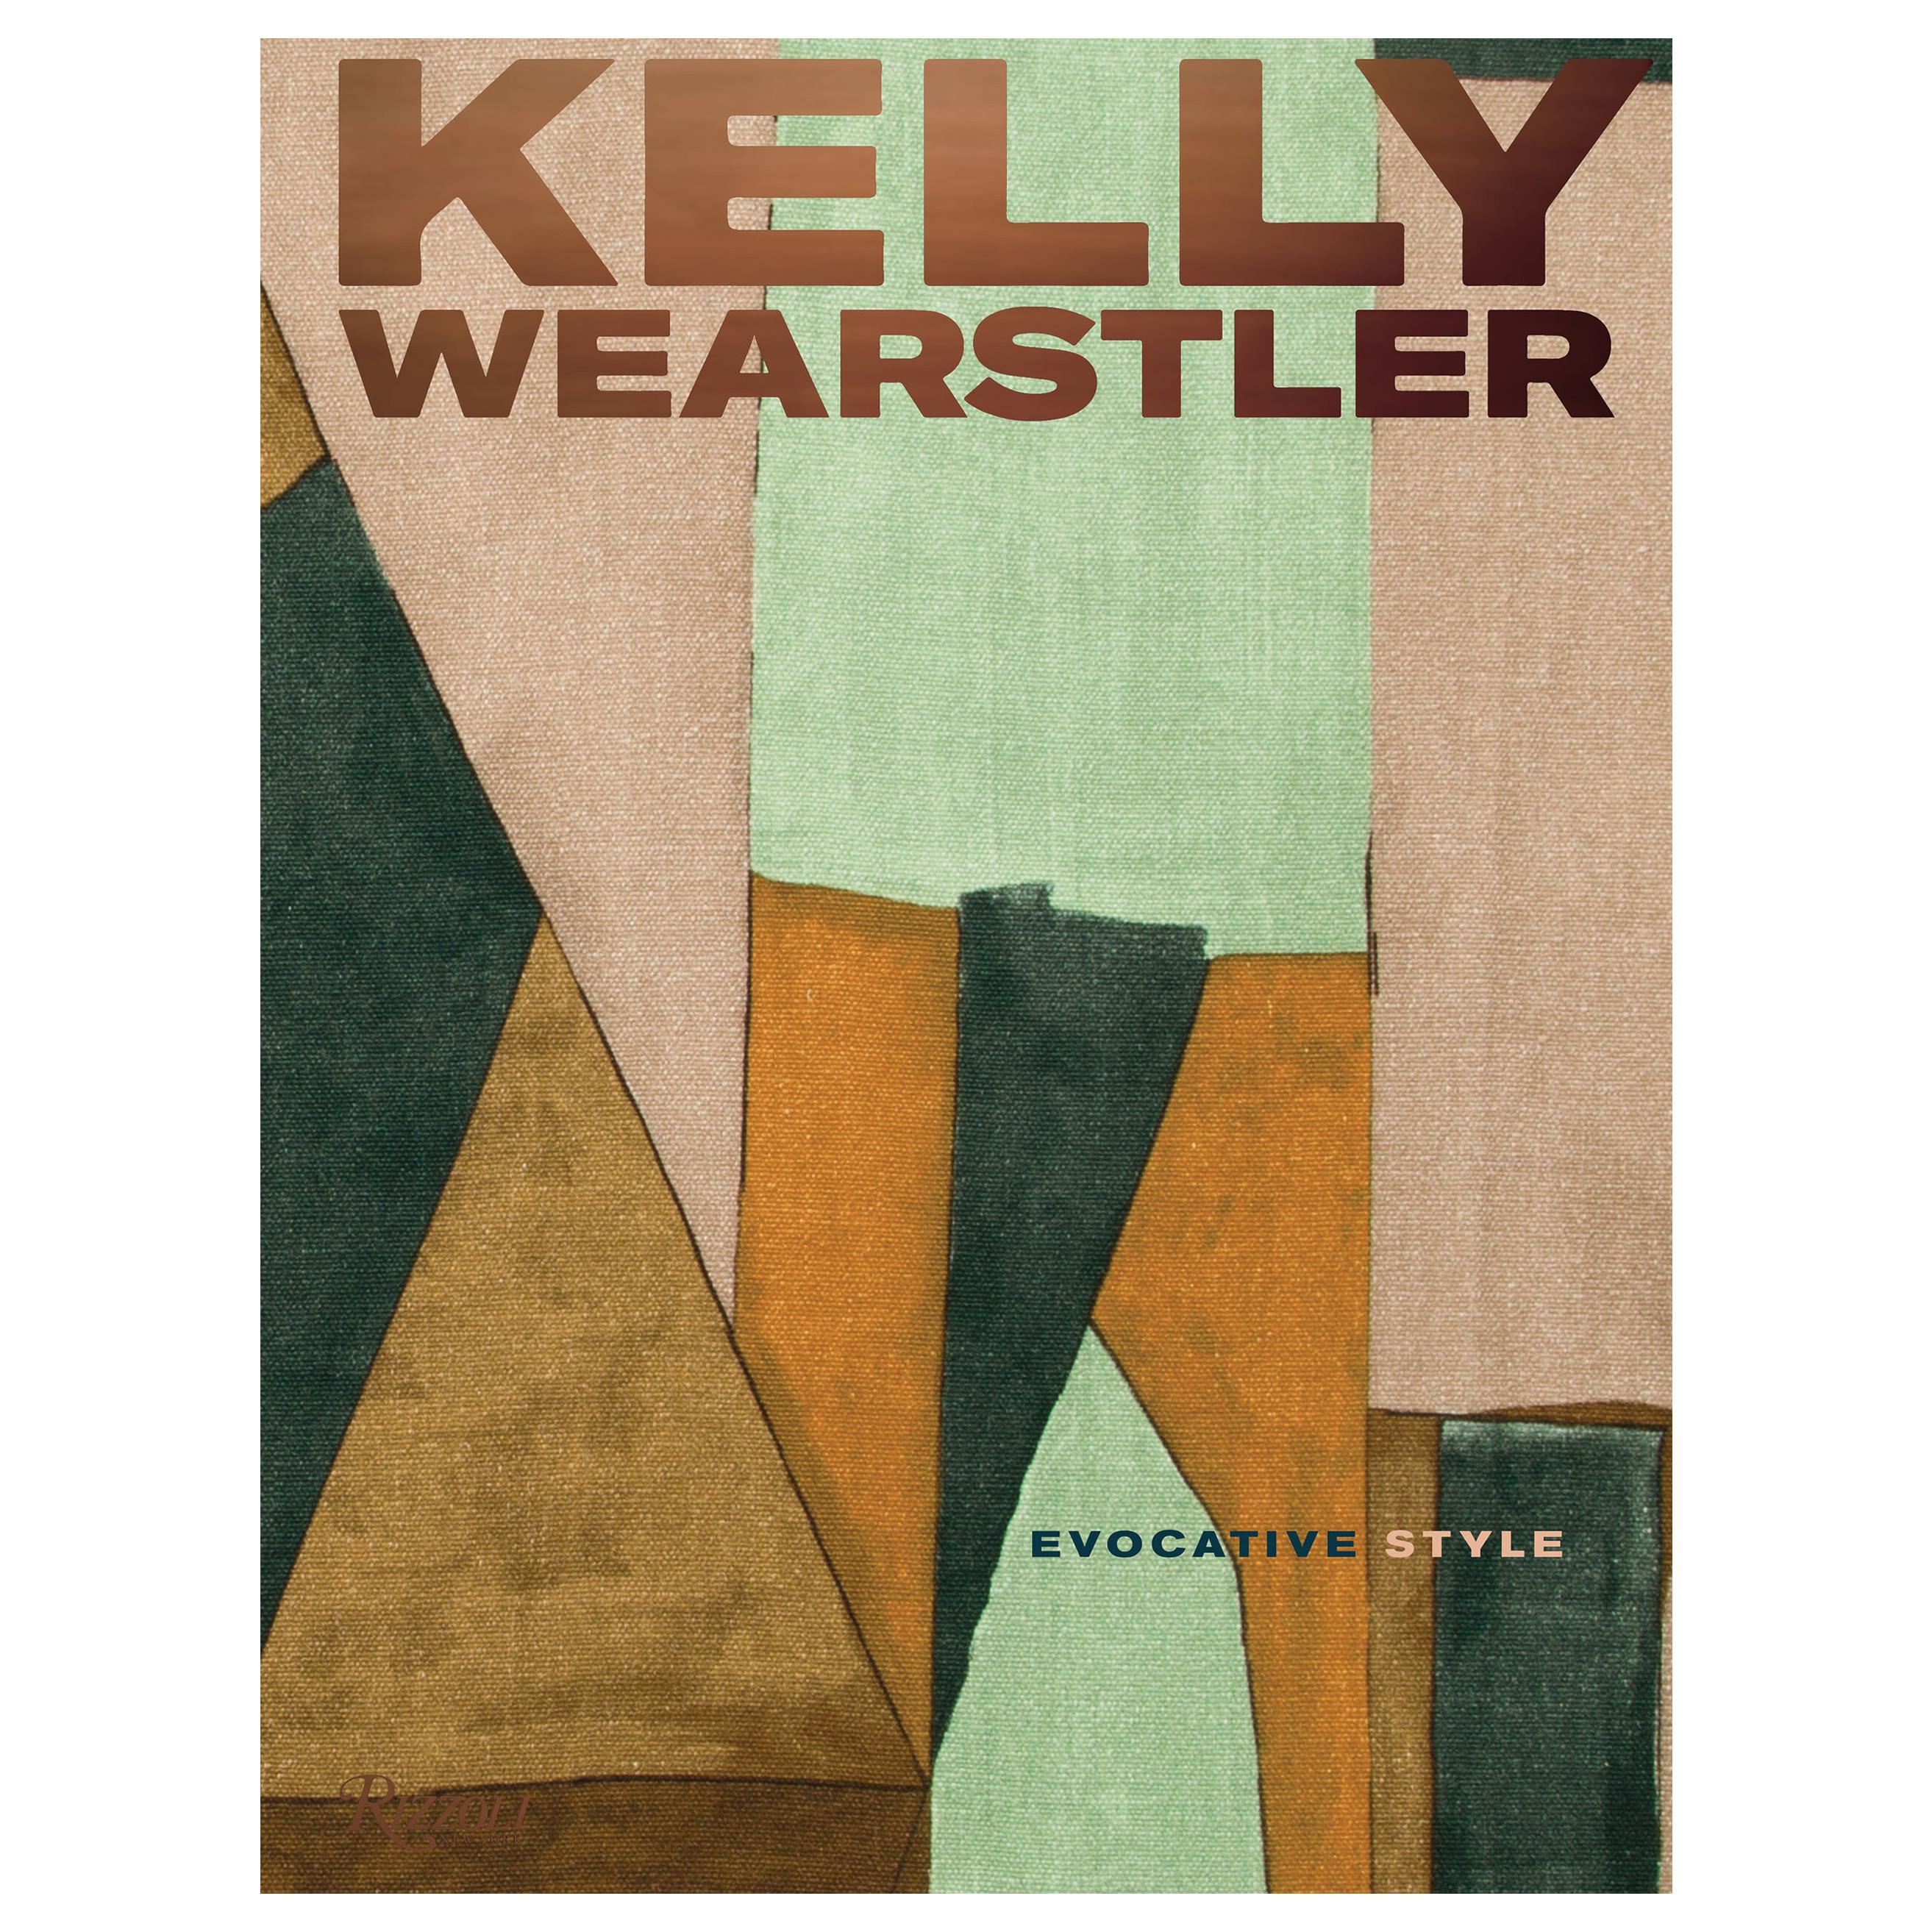 Kelly Wearstler Evocative Style